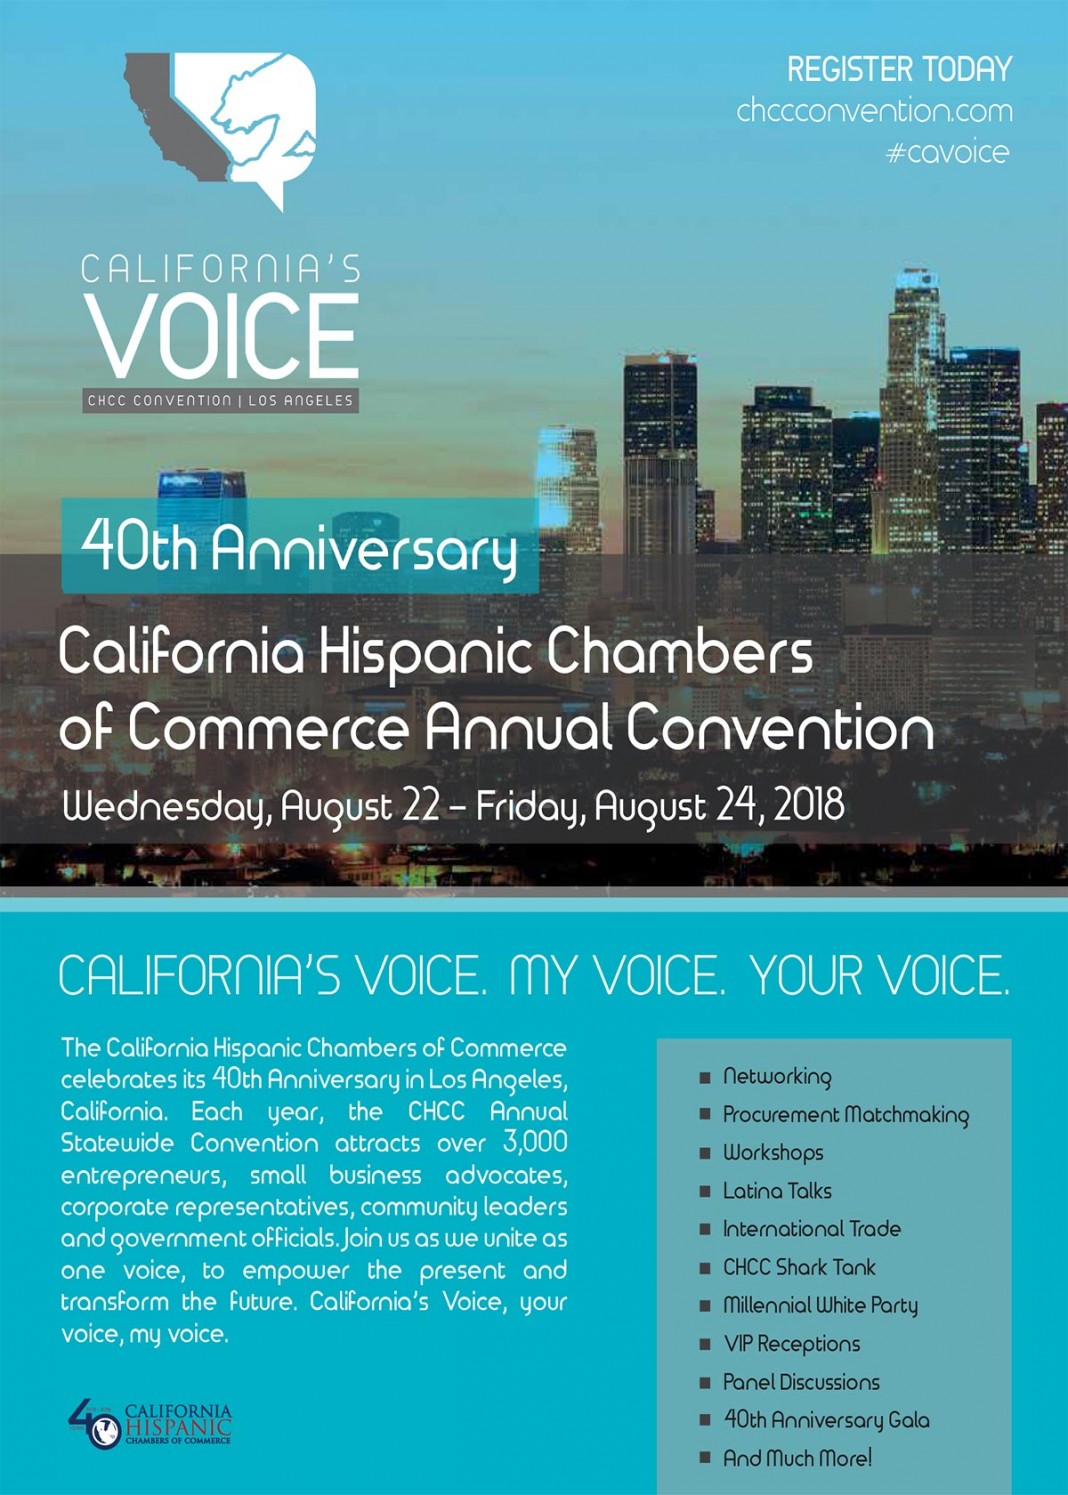 California Hispanic Chambers of Commerce (CHCC) Annual Convention 2018